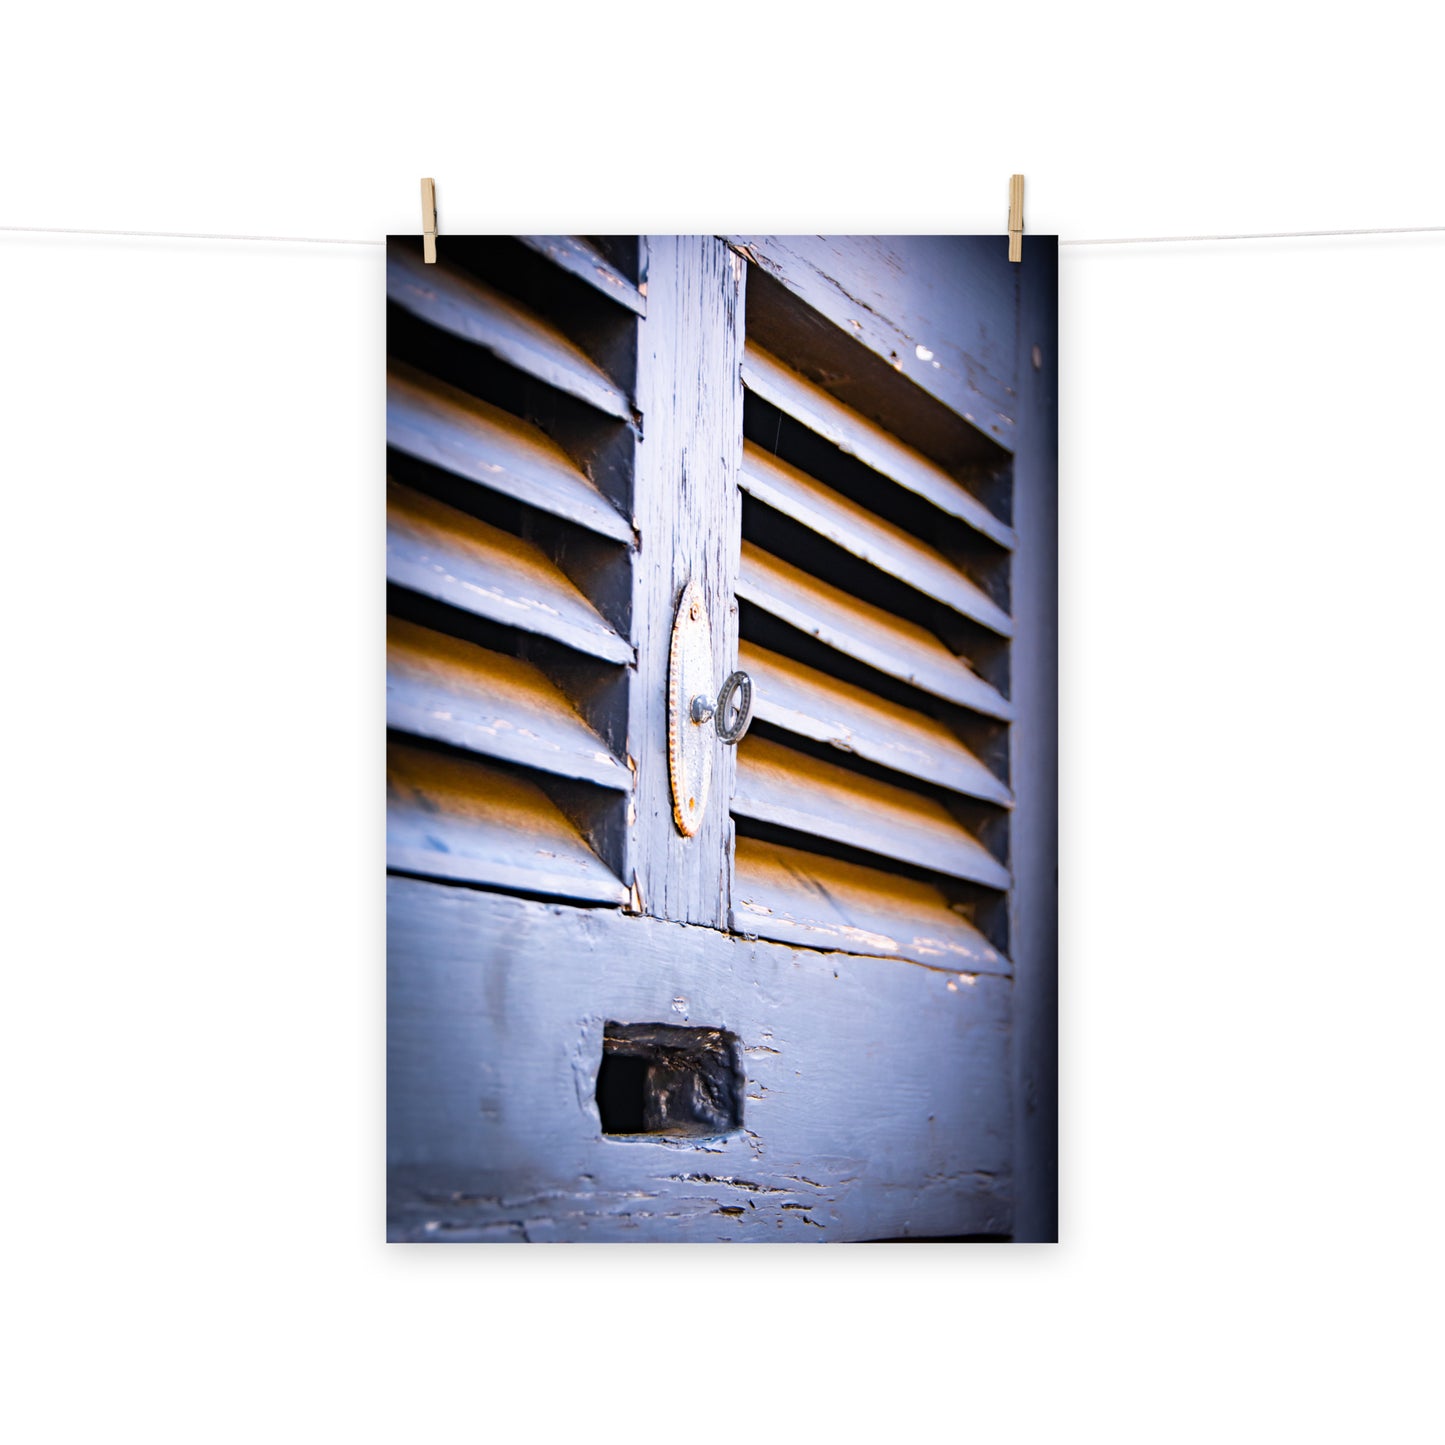 Architectural / Industrial / Cityscape Abstract Decor Old Wooden Shutter Door Savannah Ga Loose Wall Art Print 8" x 10"